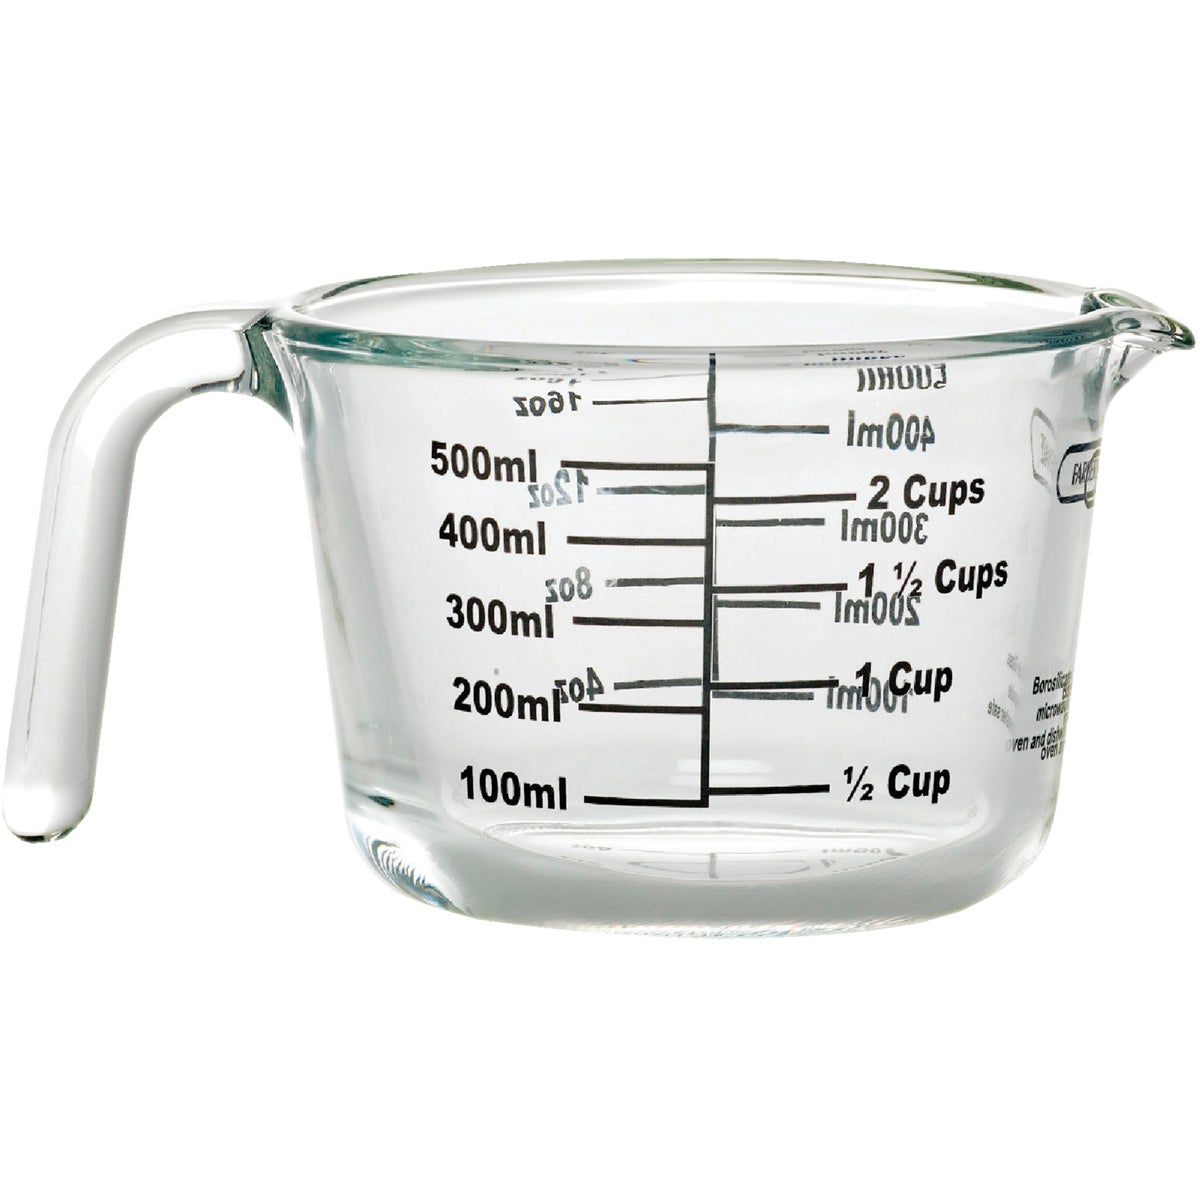 Farberware Pro 2 Cup Glass Measuring Cup